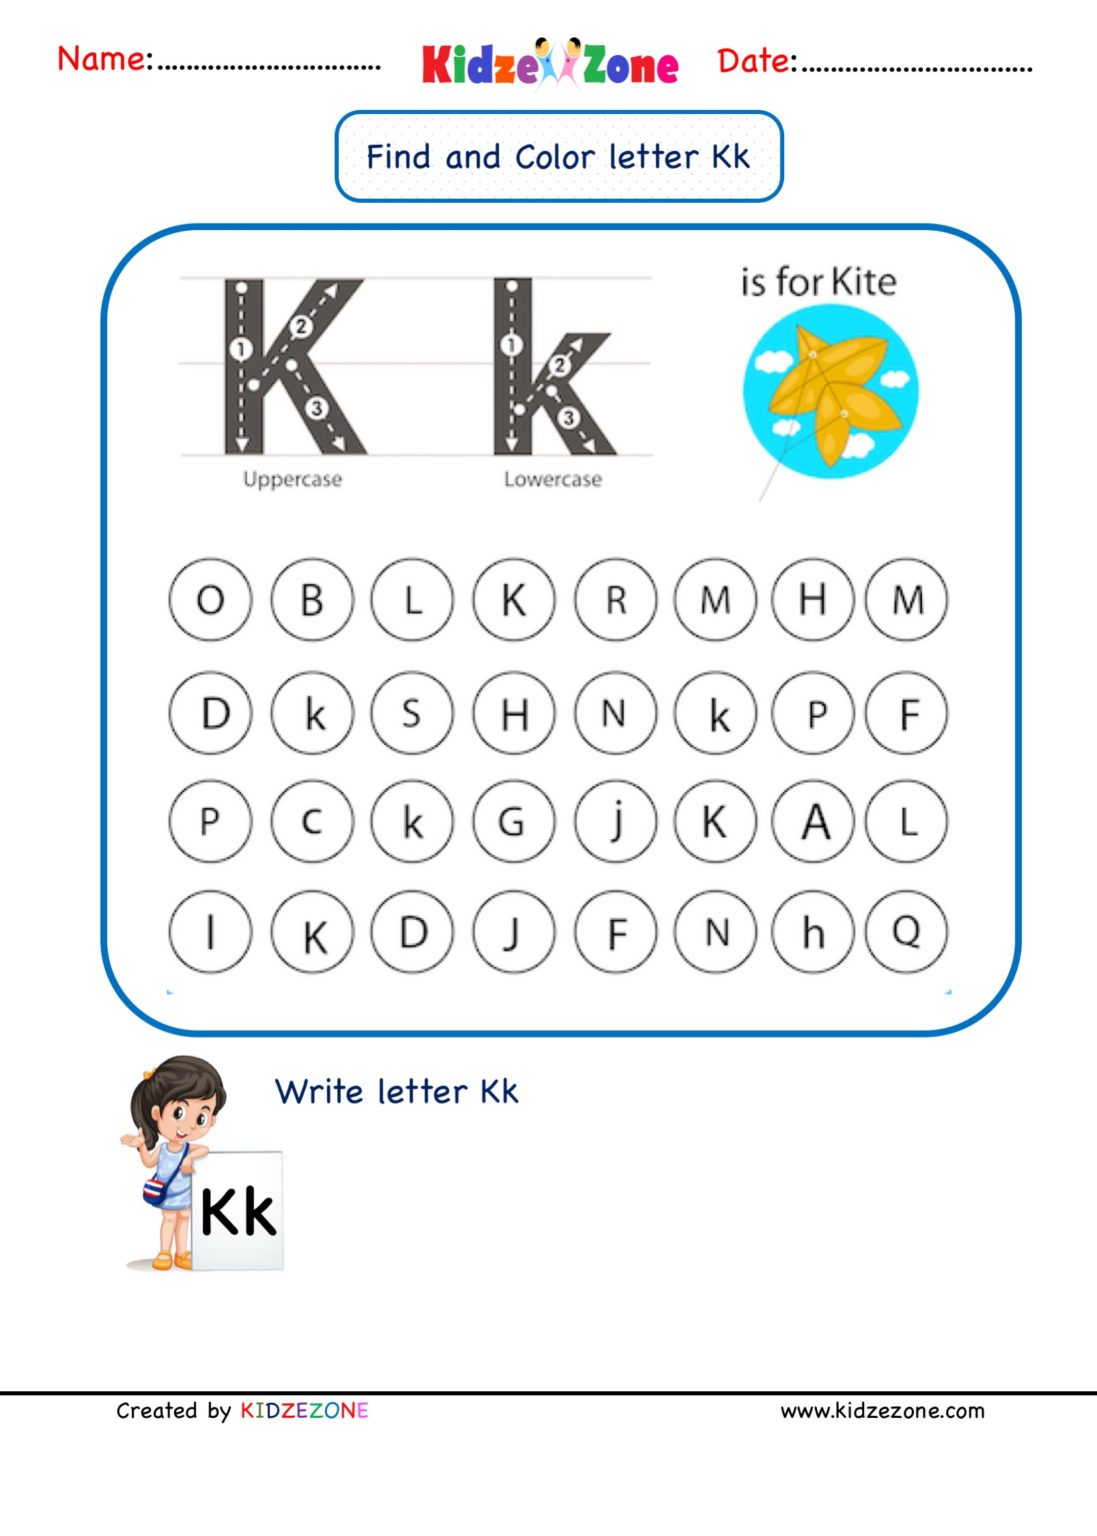 15-learning-the-letter-k-worksheets-kittybabylovecom-letter-k